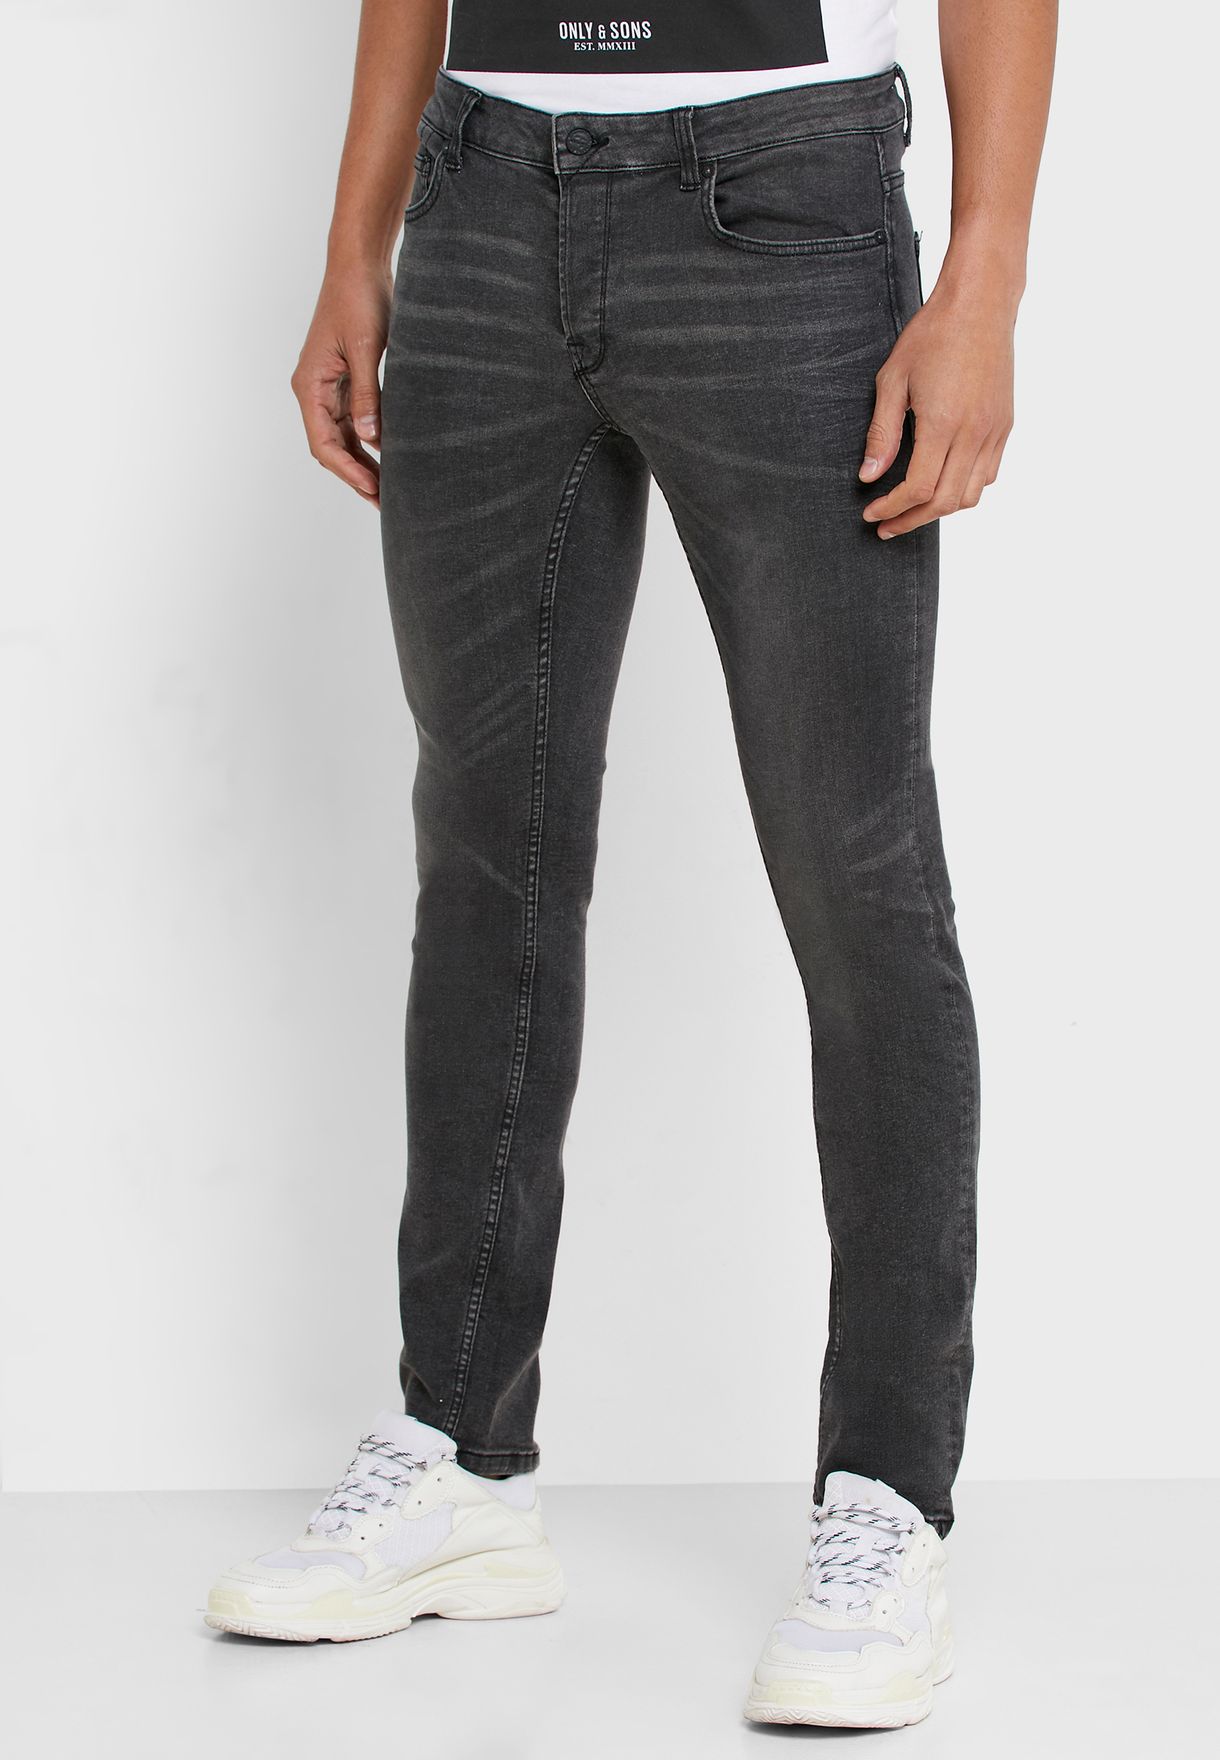 Benodigdheden Druipend De Buy Only sons grey Mid Wash Slim Fit Jeans for Men in MENA, Worldwide